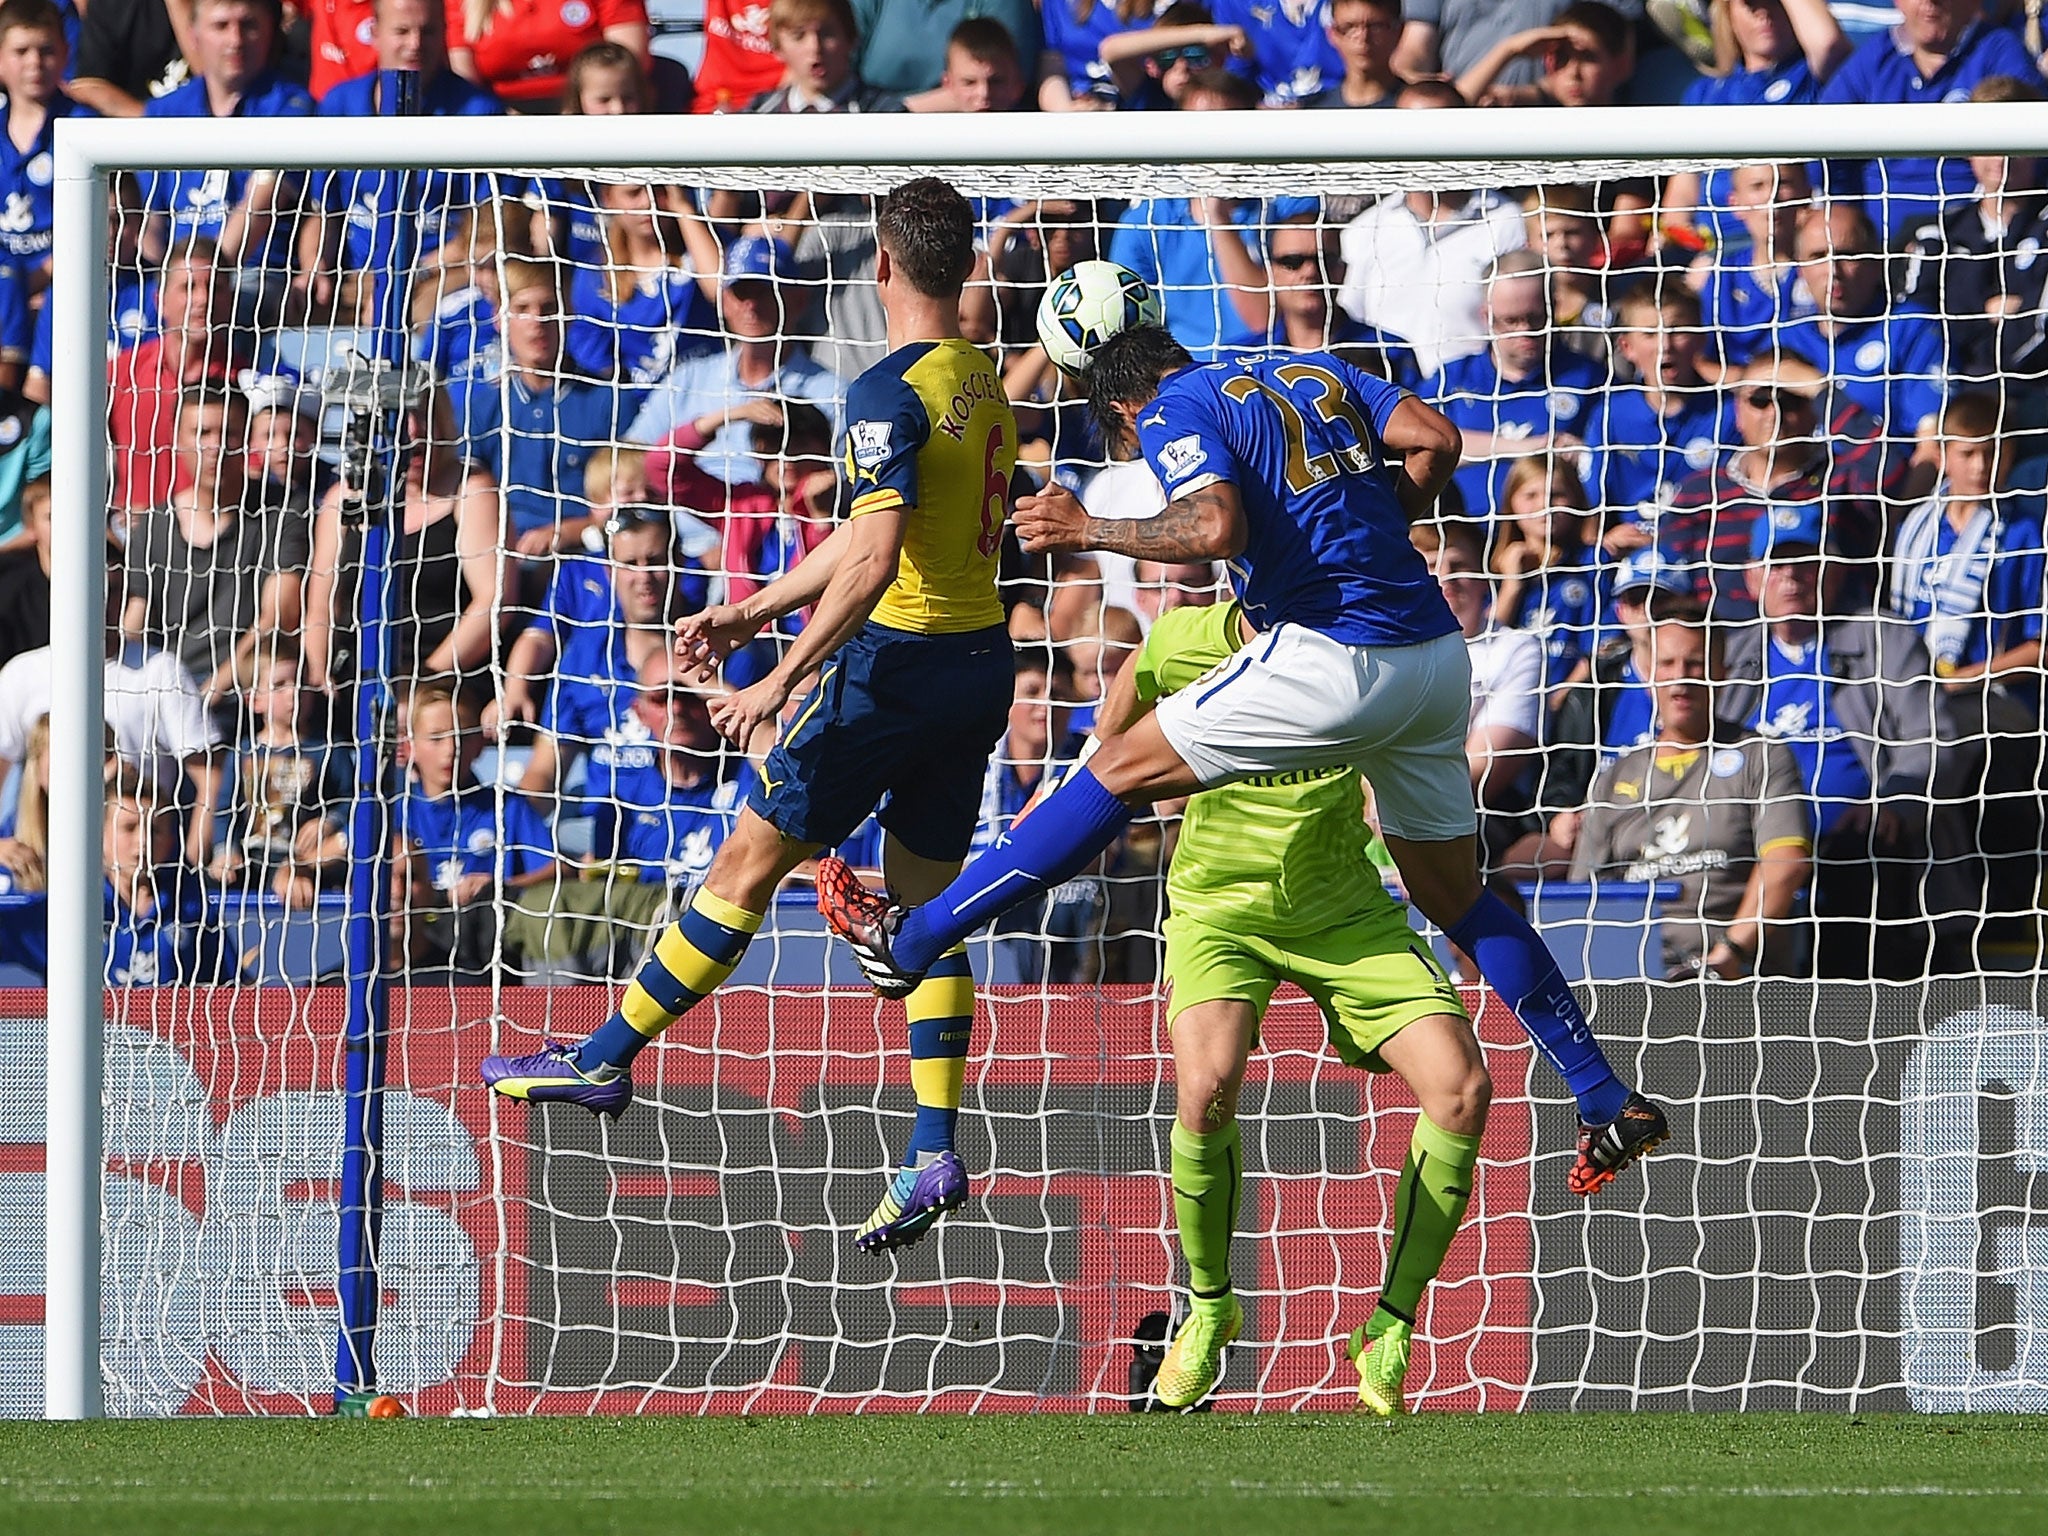 Leicester striker Leonardo Ulloa scores a header against Arsenal in the 1-1 draw